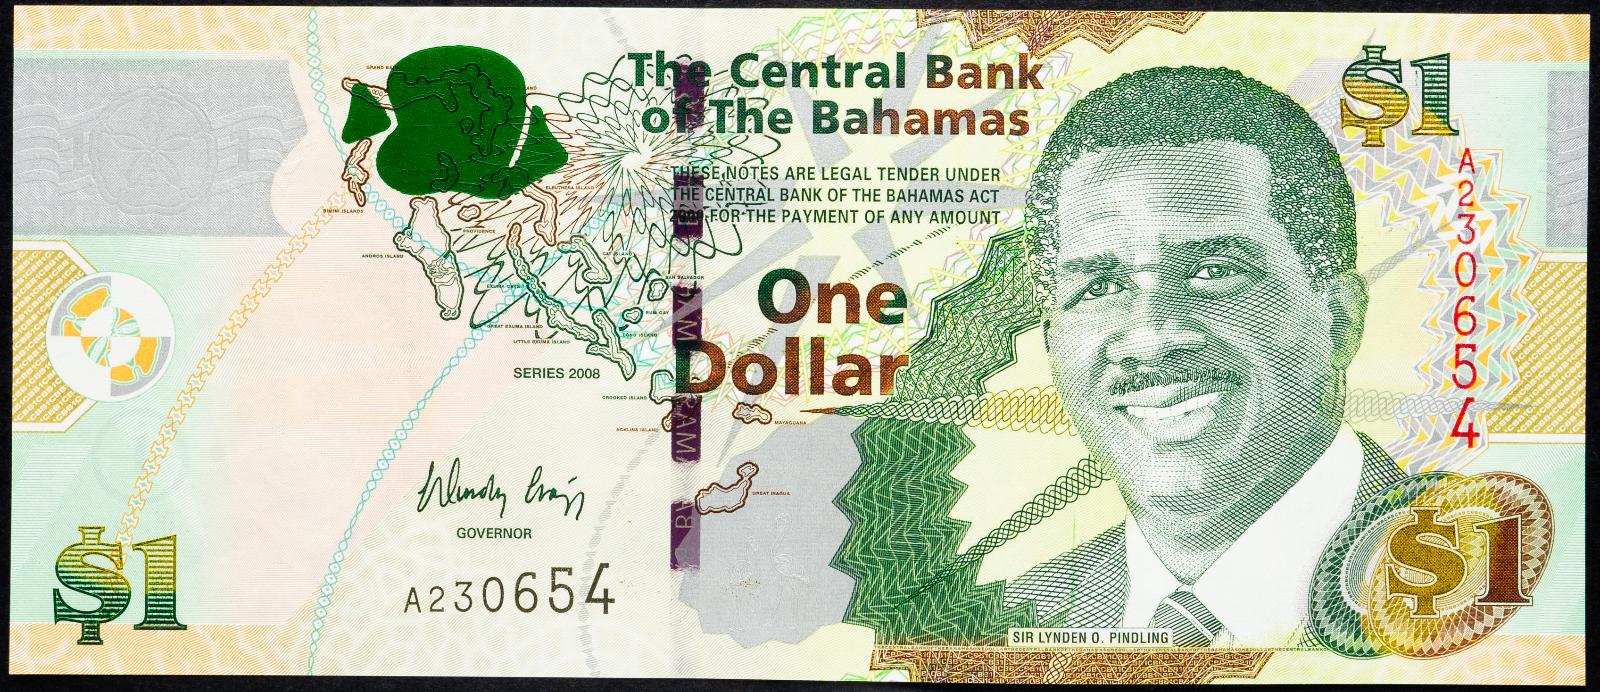 (B-10510), Bahamy, 1 Dollar 2008, UNC - Zberateľstvo